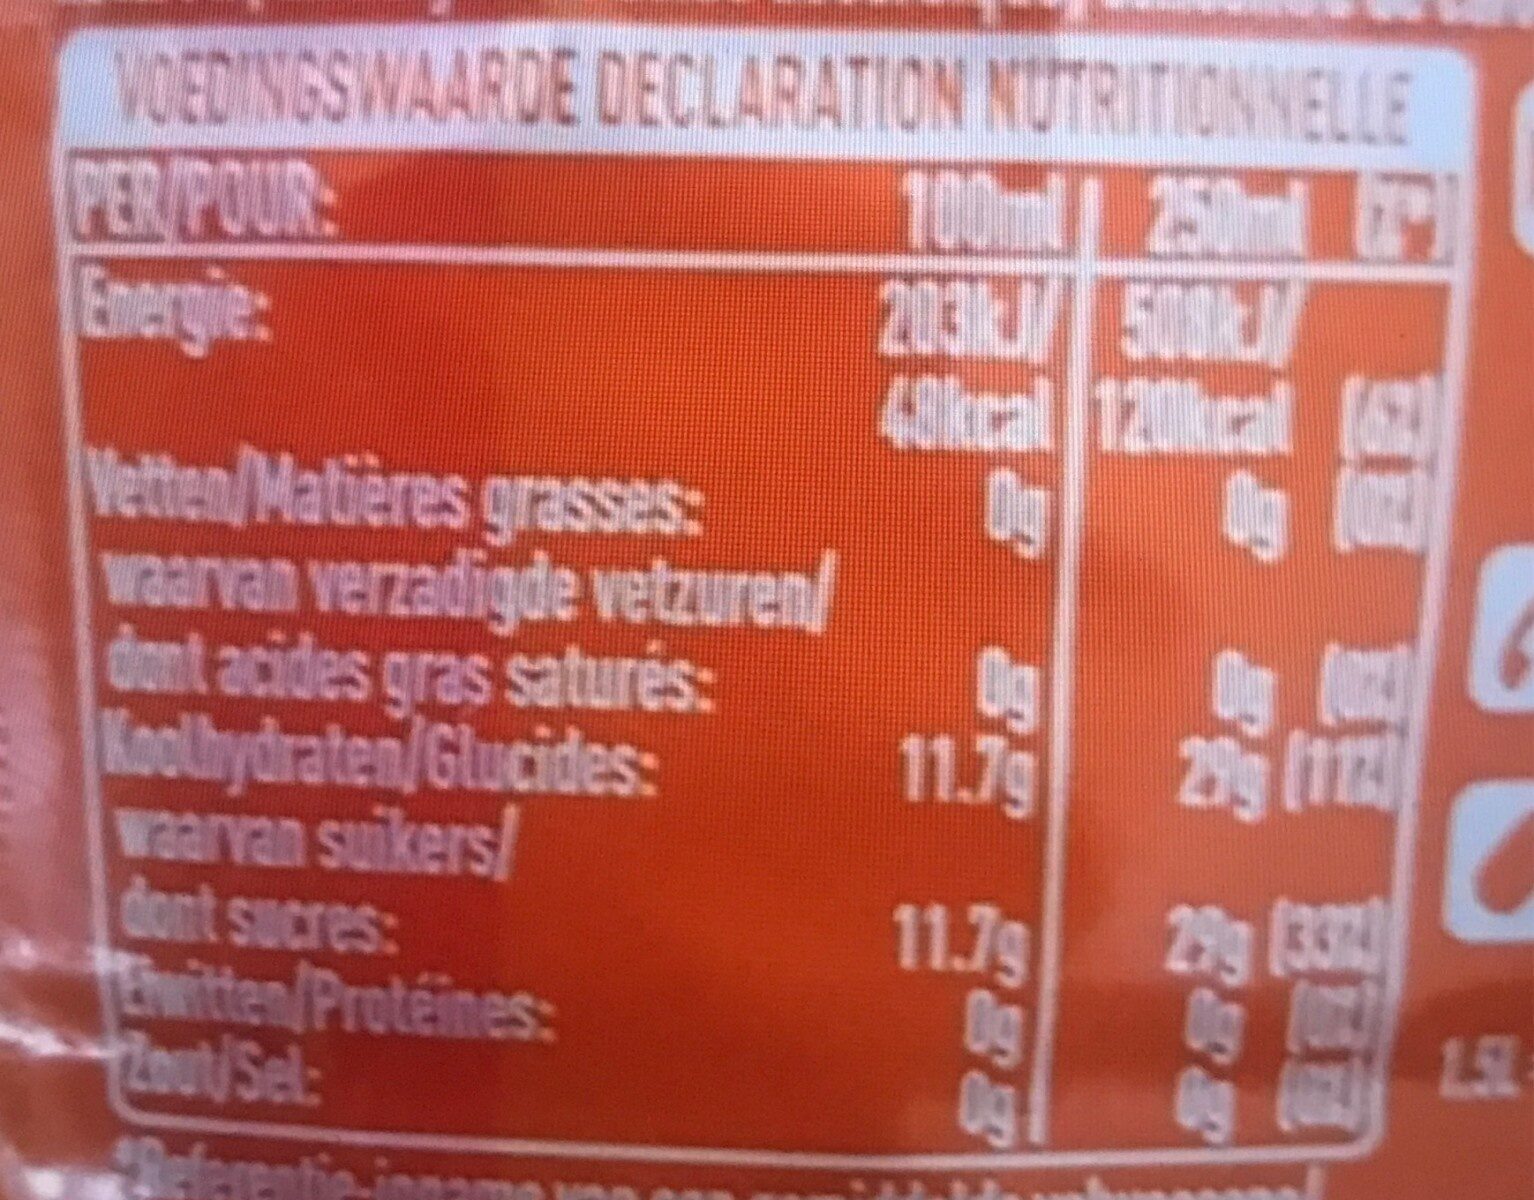 Fanta orange 1.5l - Nährwertangaben - fr